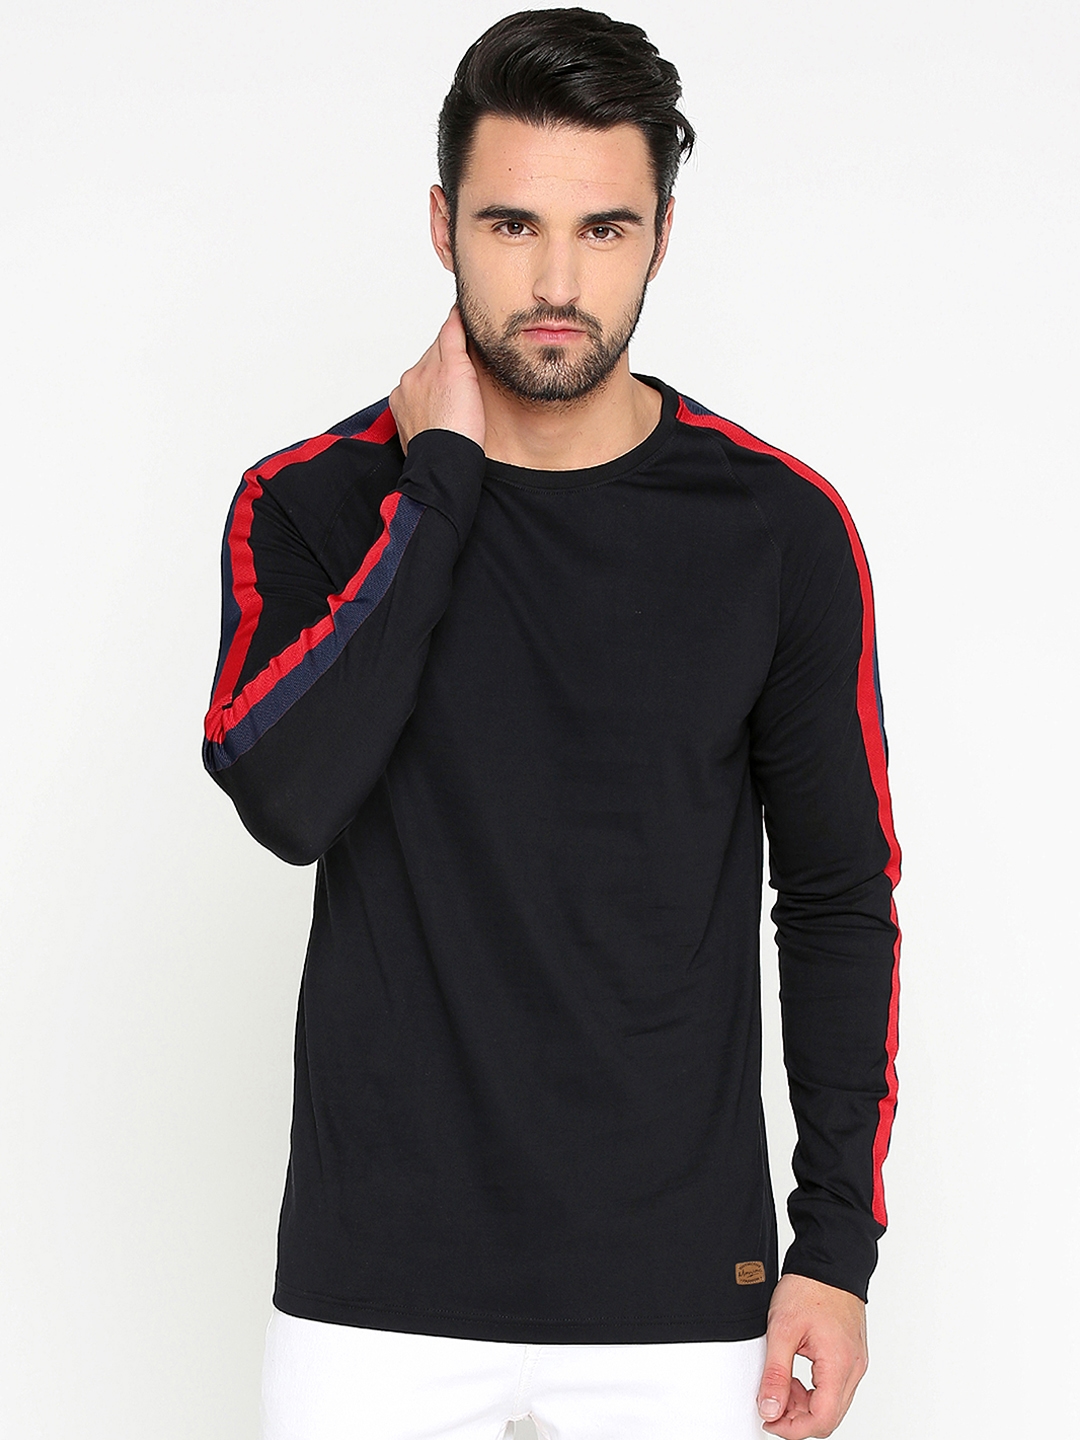 For 380/-(70% Off) Men's Solid Full Sleeves Raglan Neck Black Cotton T-shirt at Myntra